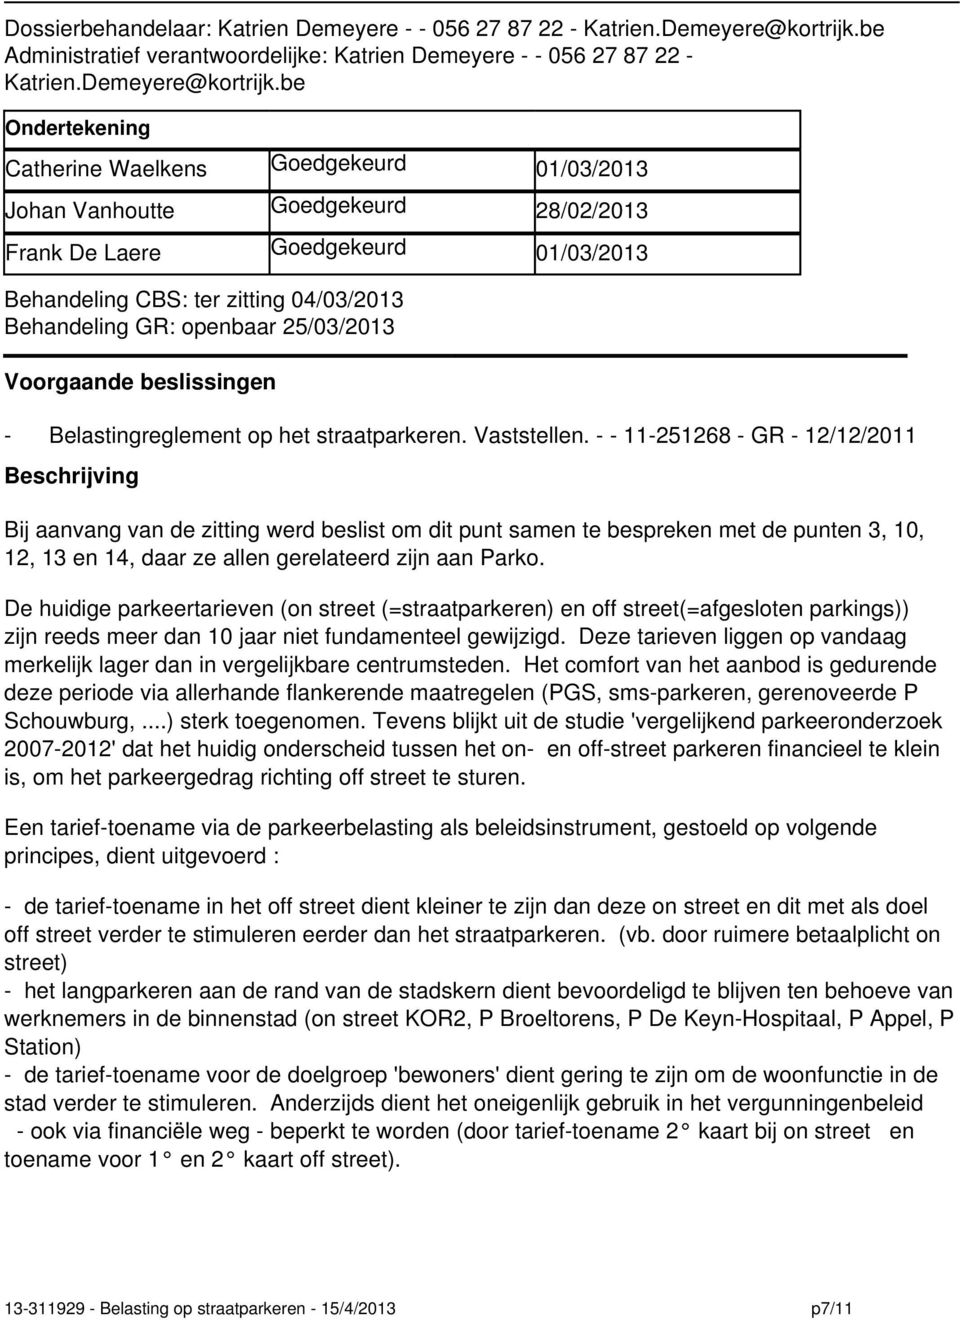 be Ondertekening Catherine Waelkens Goedgekeurd 01/03/2013 Johan Vanhoutte Goedgekeurd 28/02/2013 Frank De Laere Goedgekeurd 01/03/2013 Behandeling CBS: ter zitting 04/03/2013 Behandeling GR: